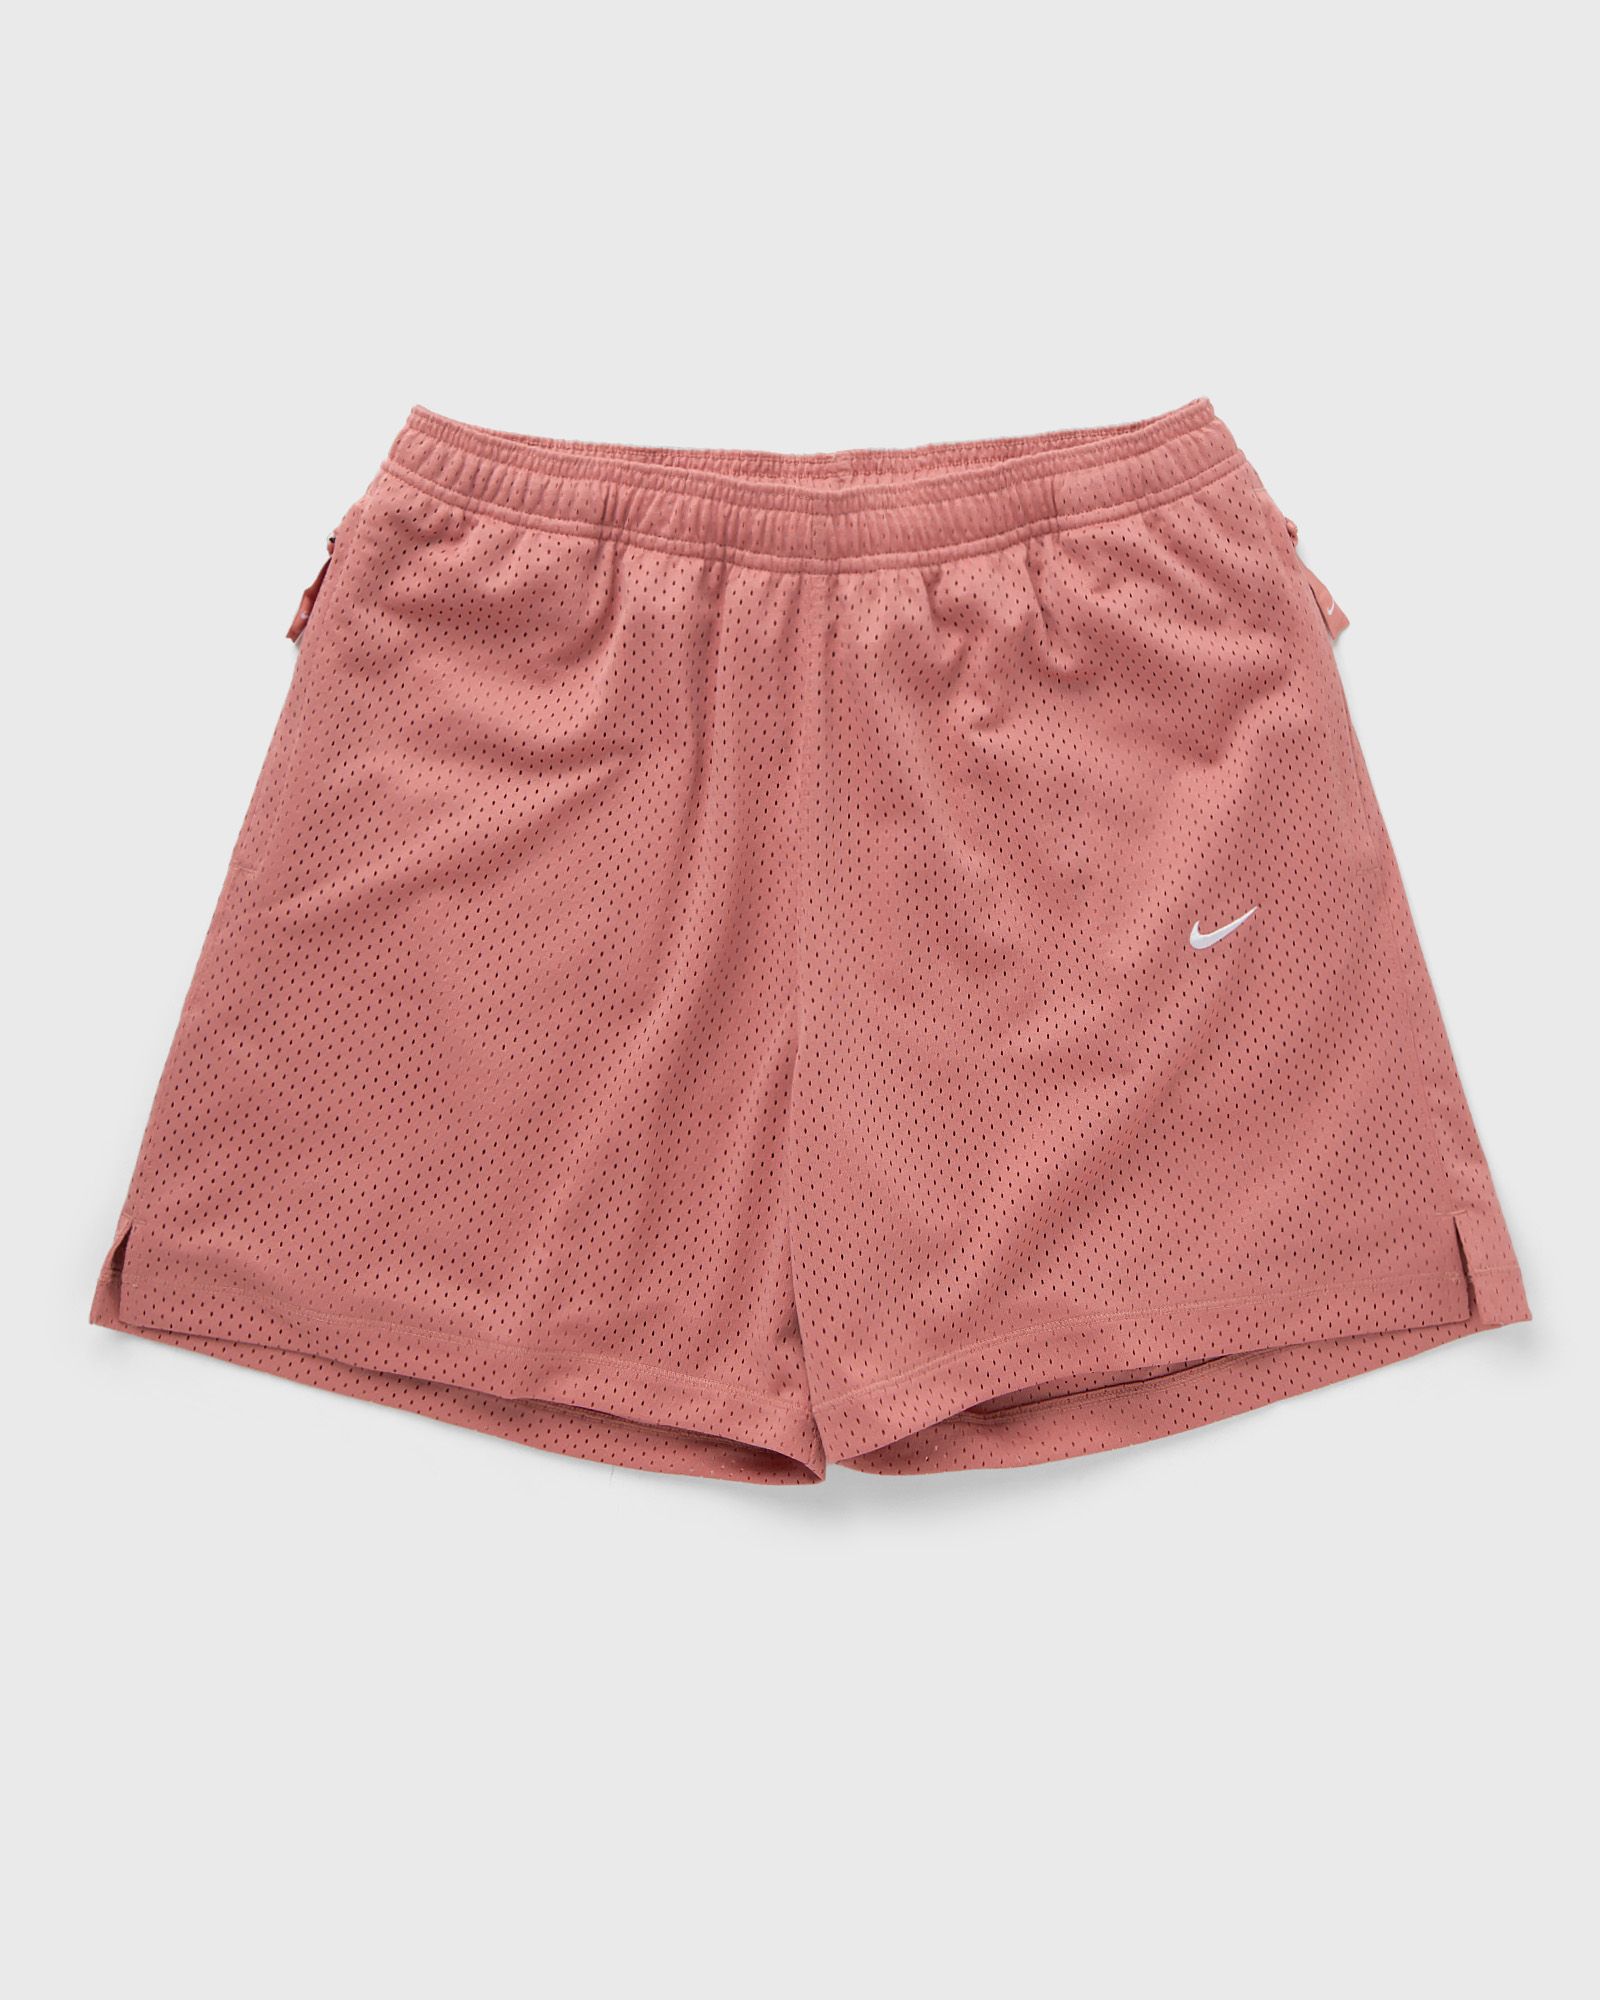 Nike - solo swoosh mesh shorts men sport & team shorts red in größe:l